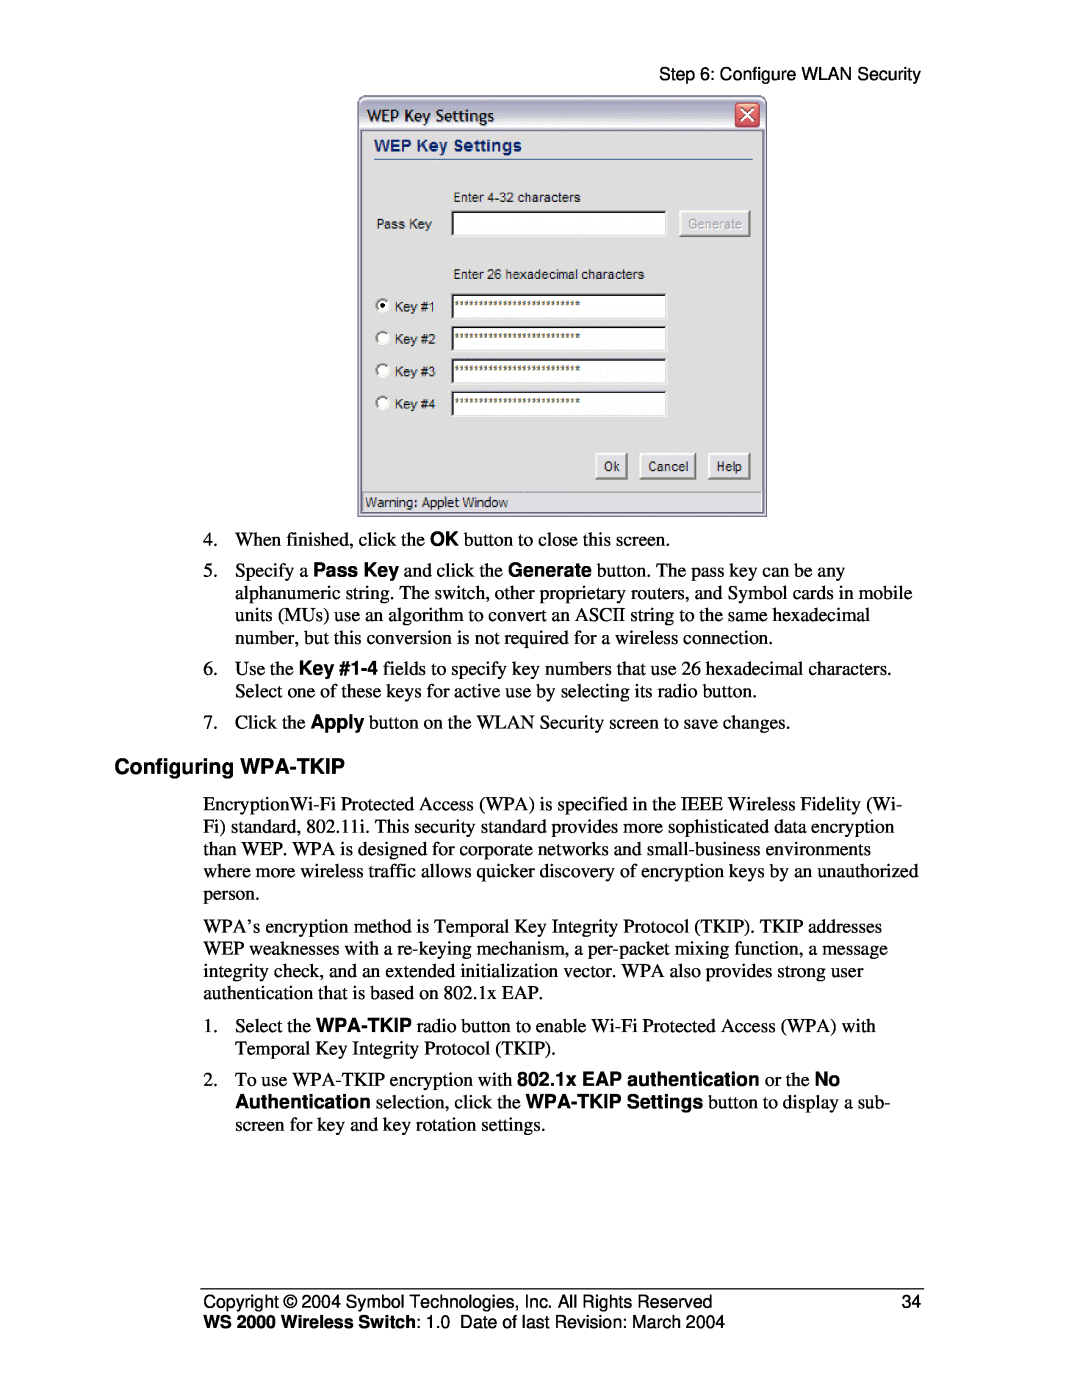 Symbol Technologies WS 2000 manual Configuring WPA-TKIP 